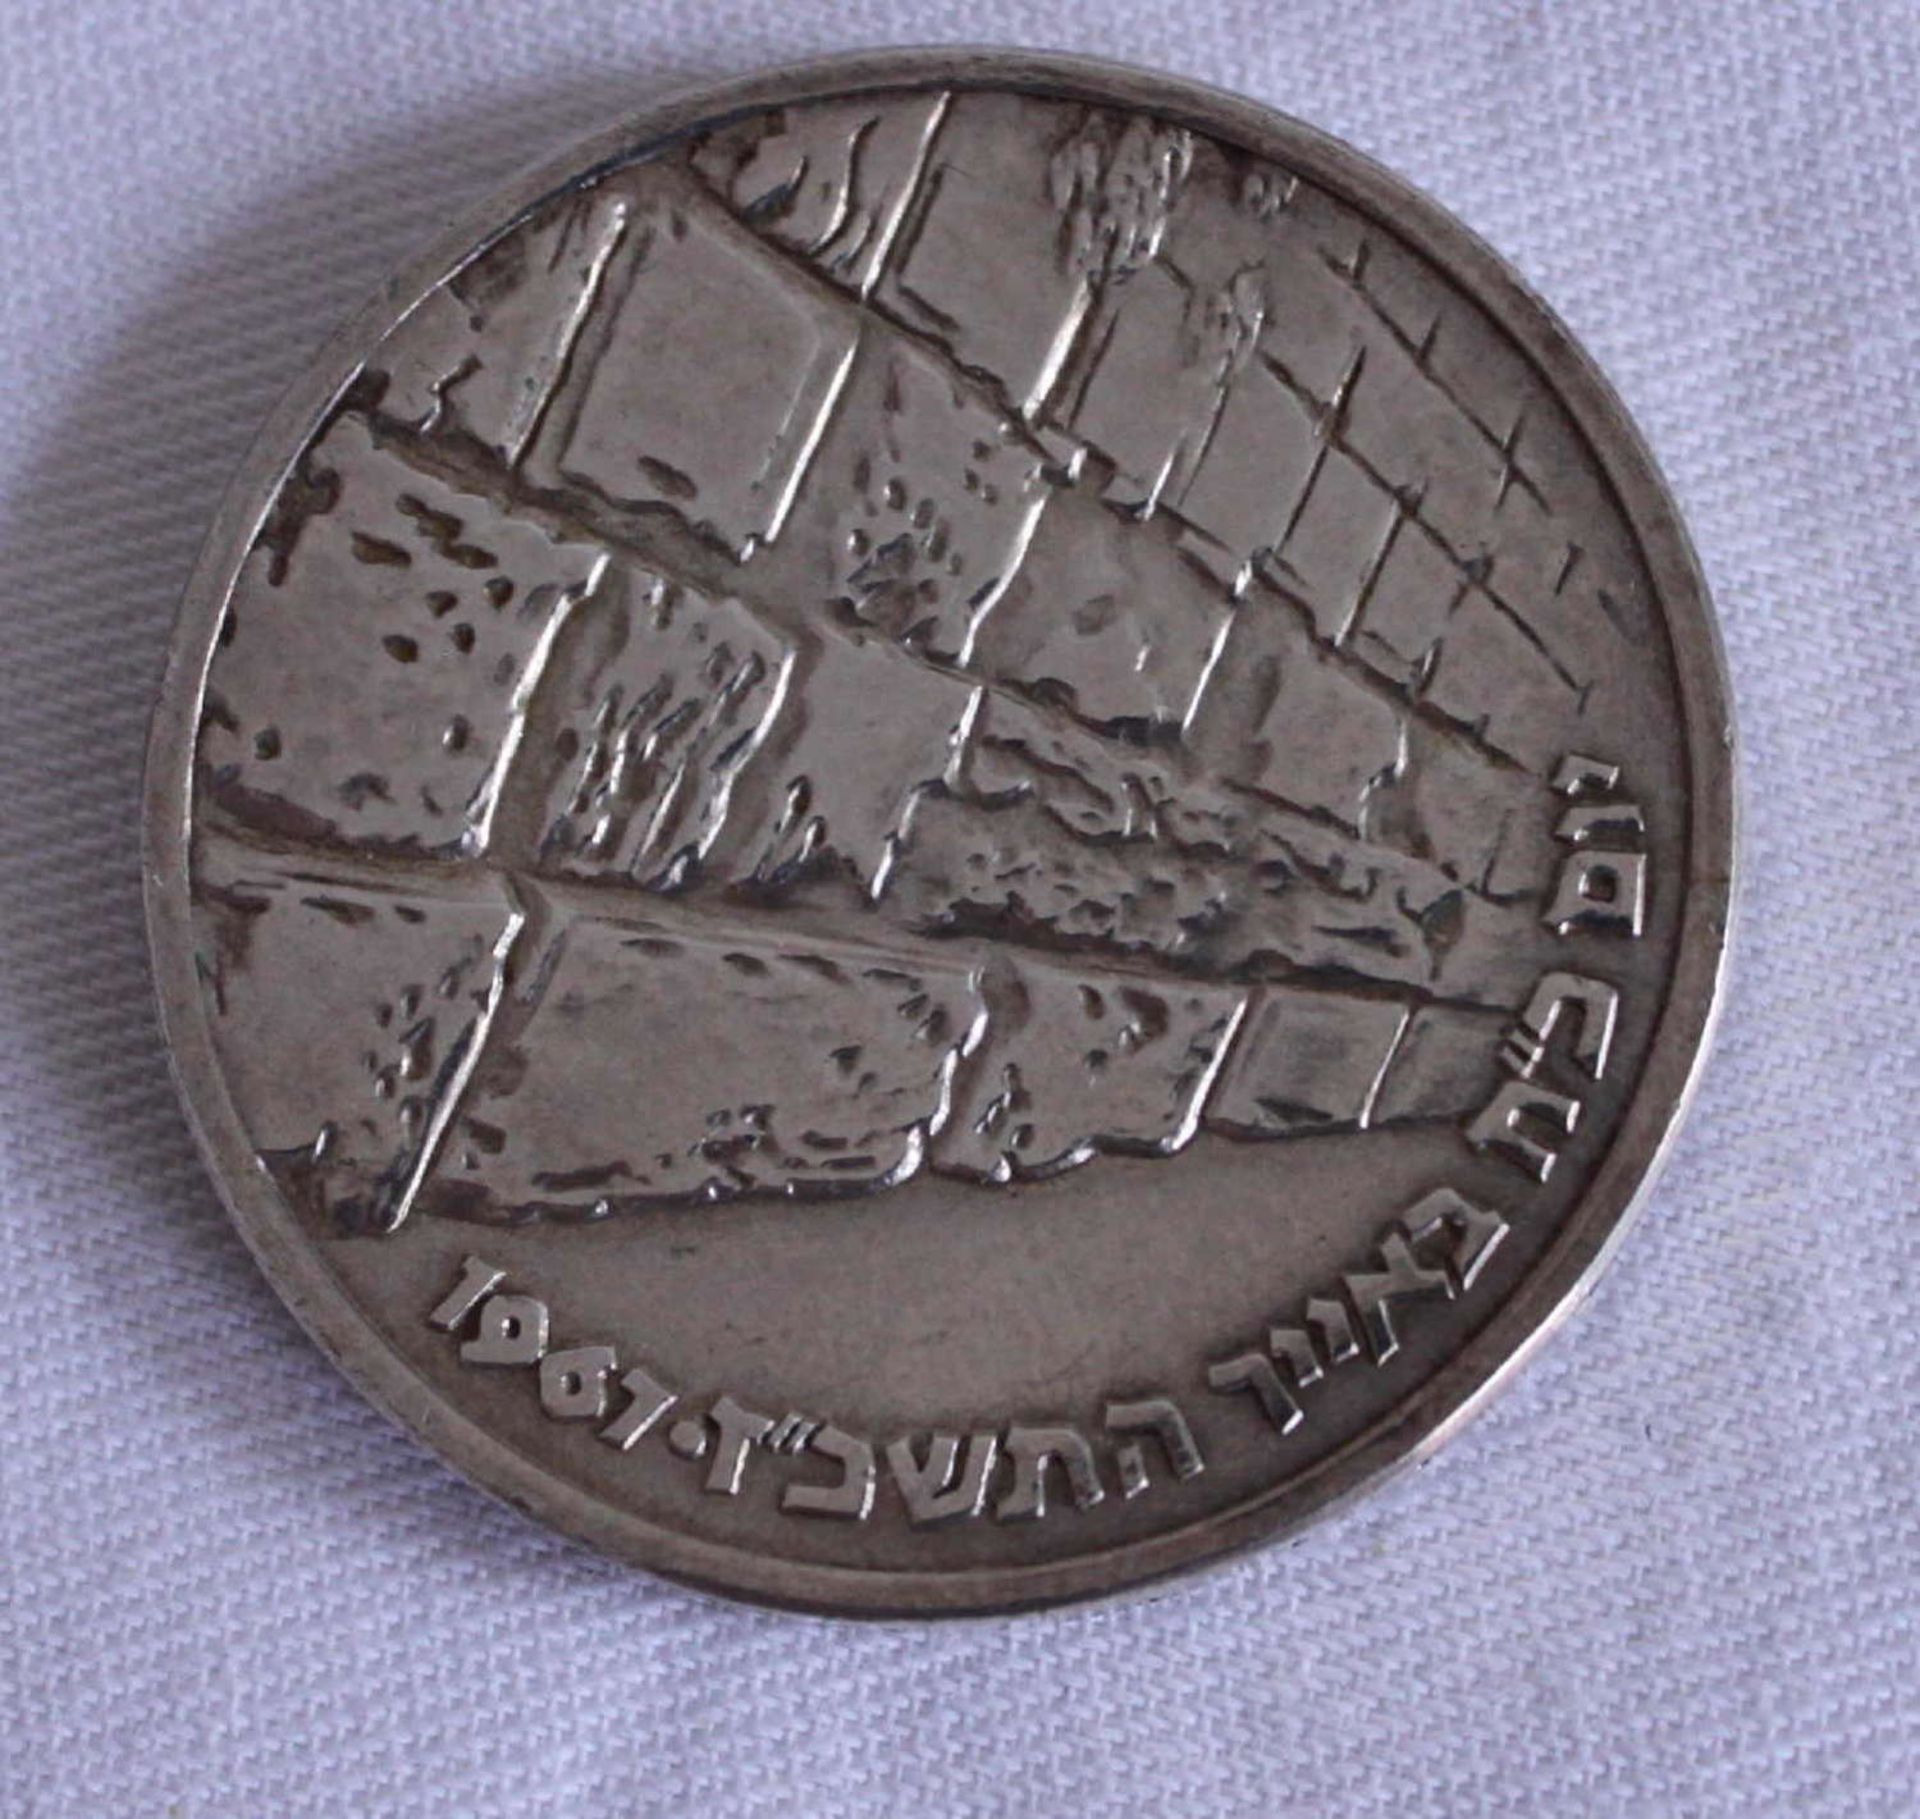 10 Lirot 1967 Israel, Catalog No.K.M. 49 - Image 2 of 2